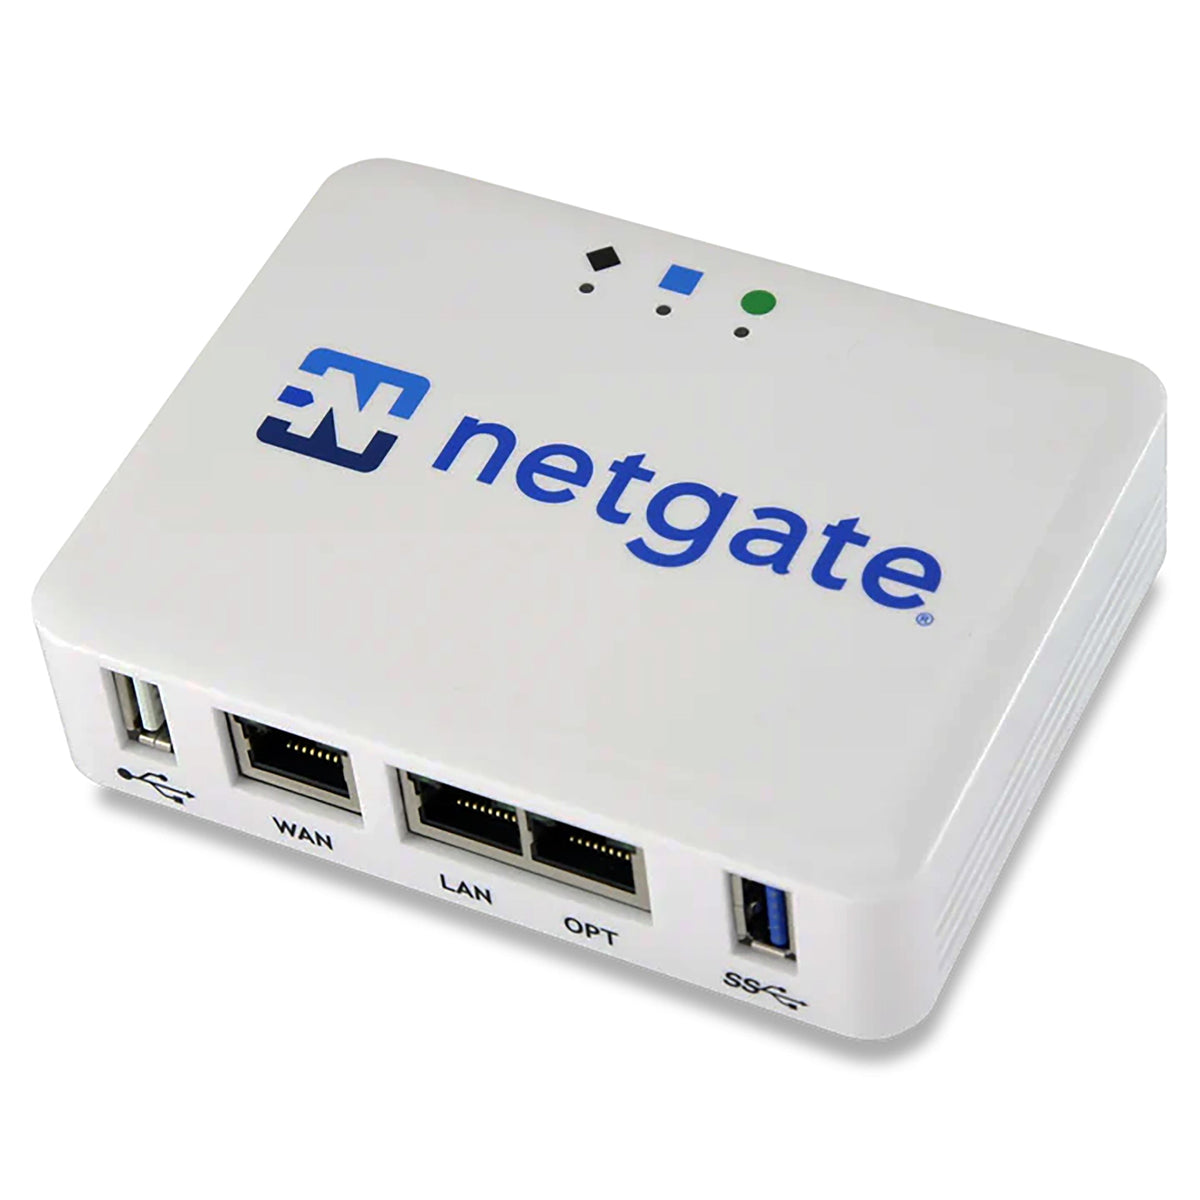 www.netgate.com